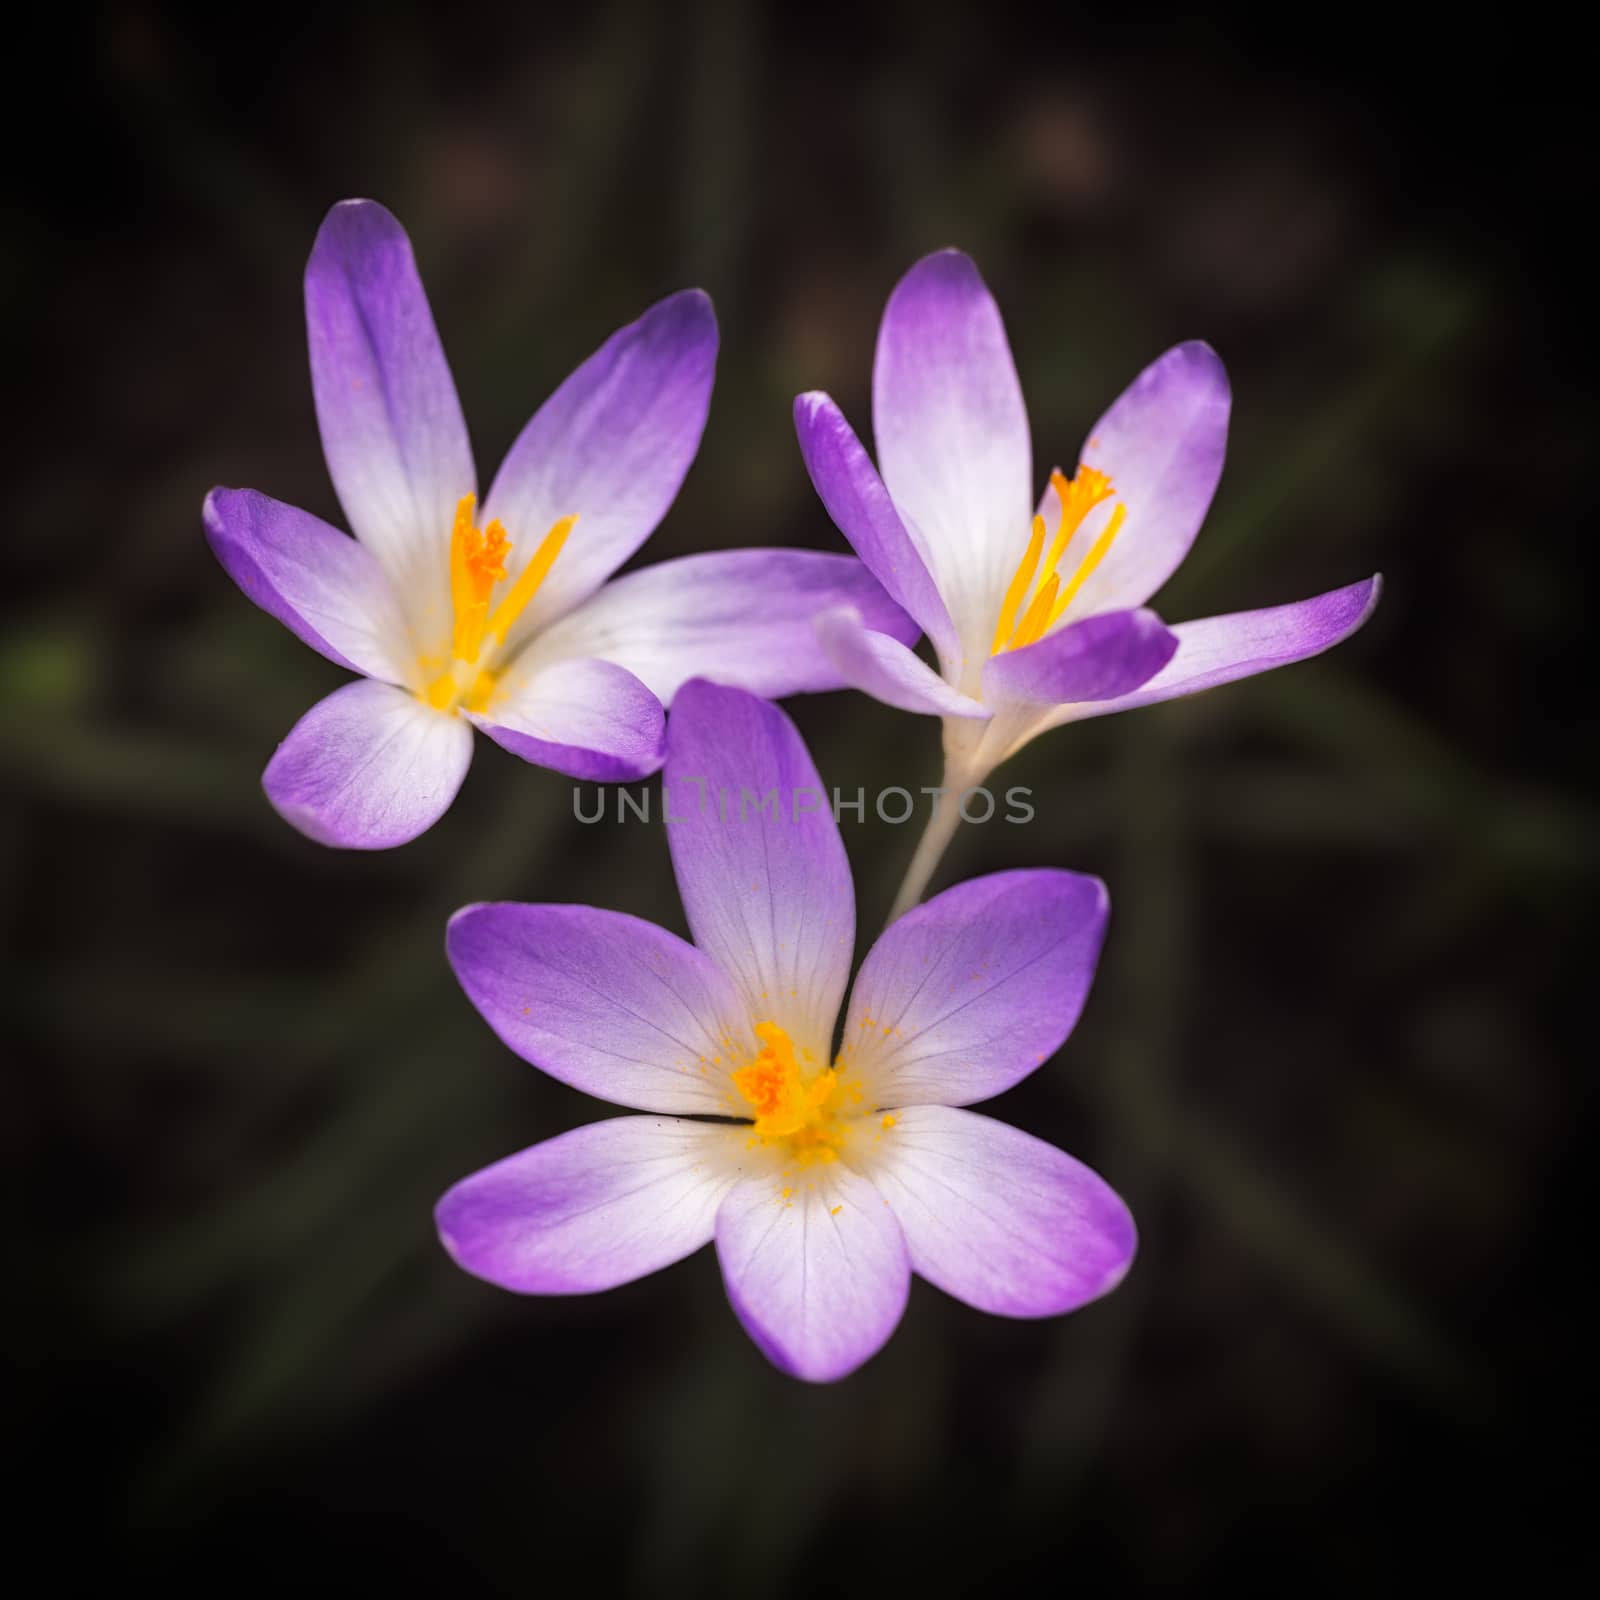 Blooming violet Crocus at springtime by fisfra